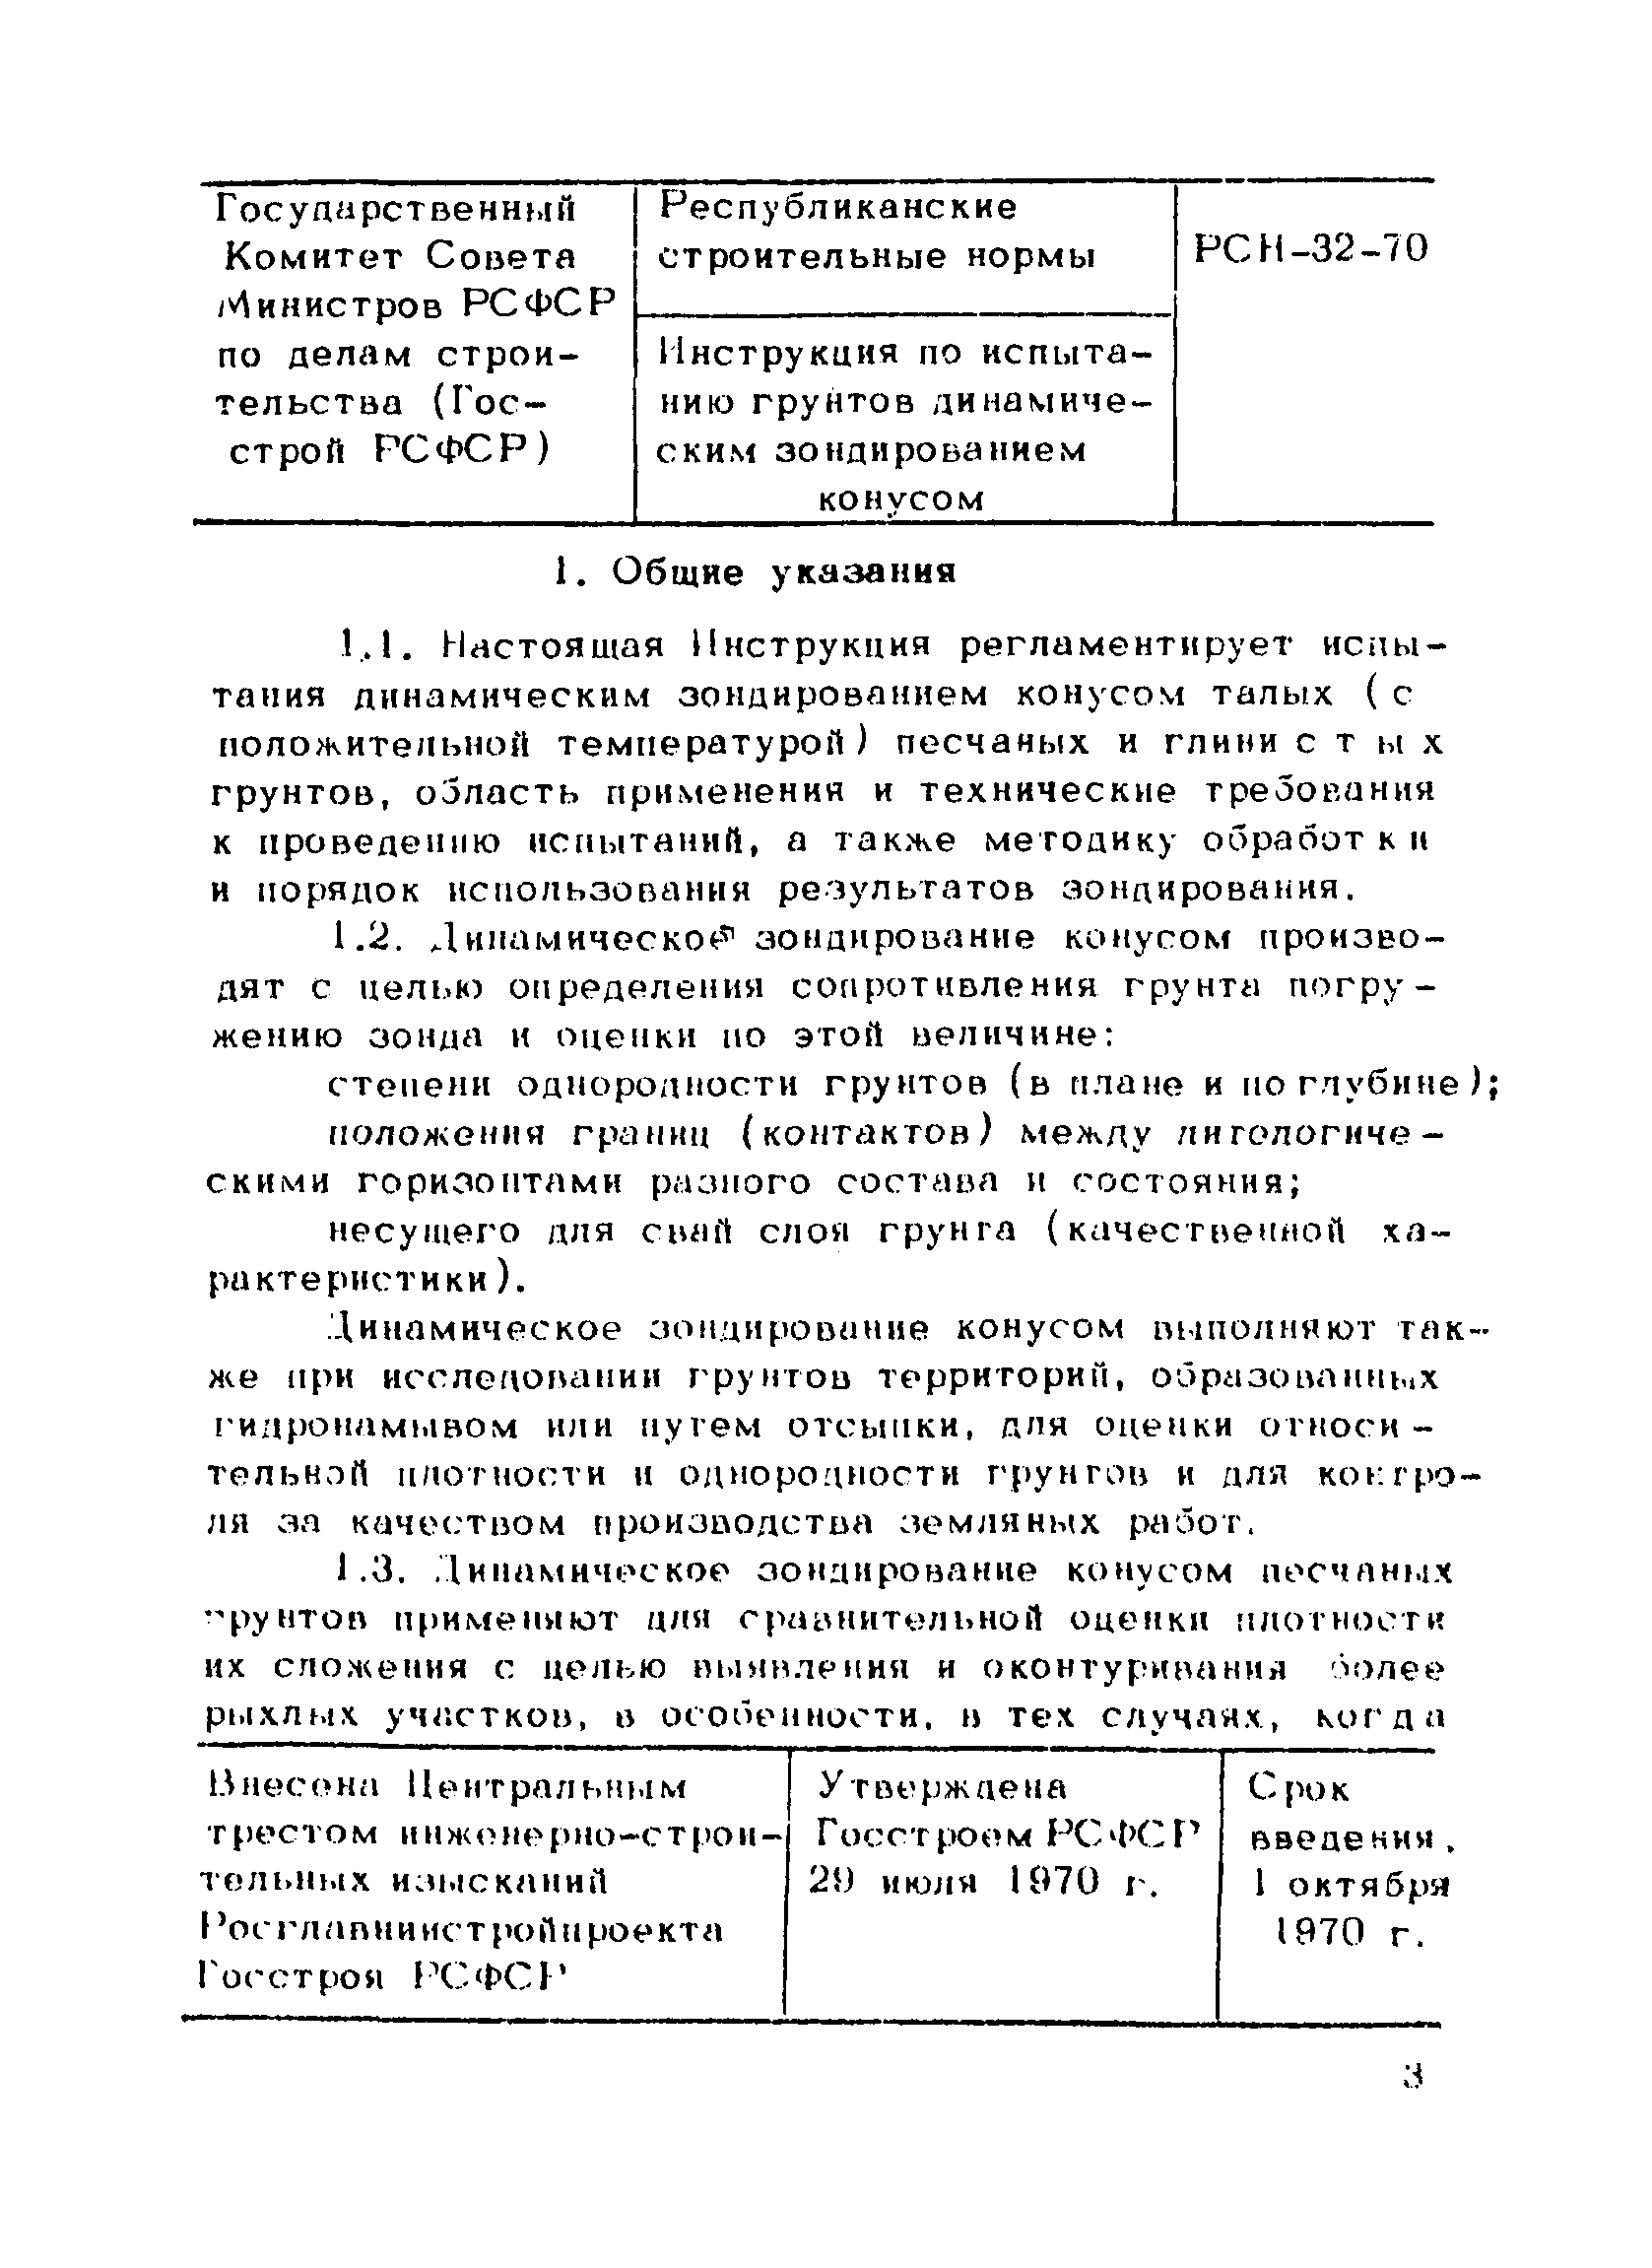 РСН 32-70/Госстрой РСФСР